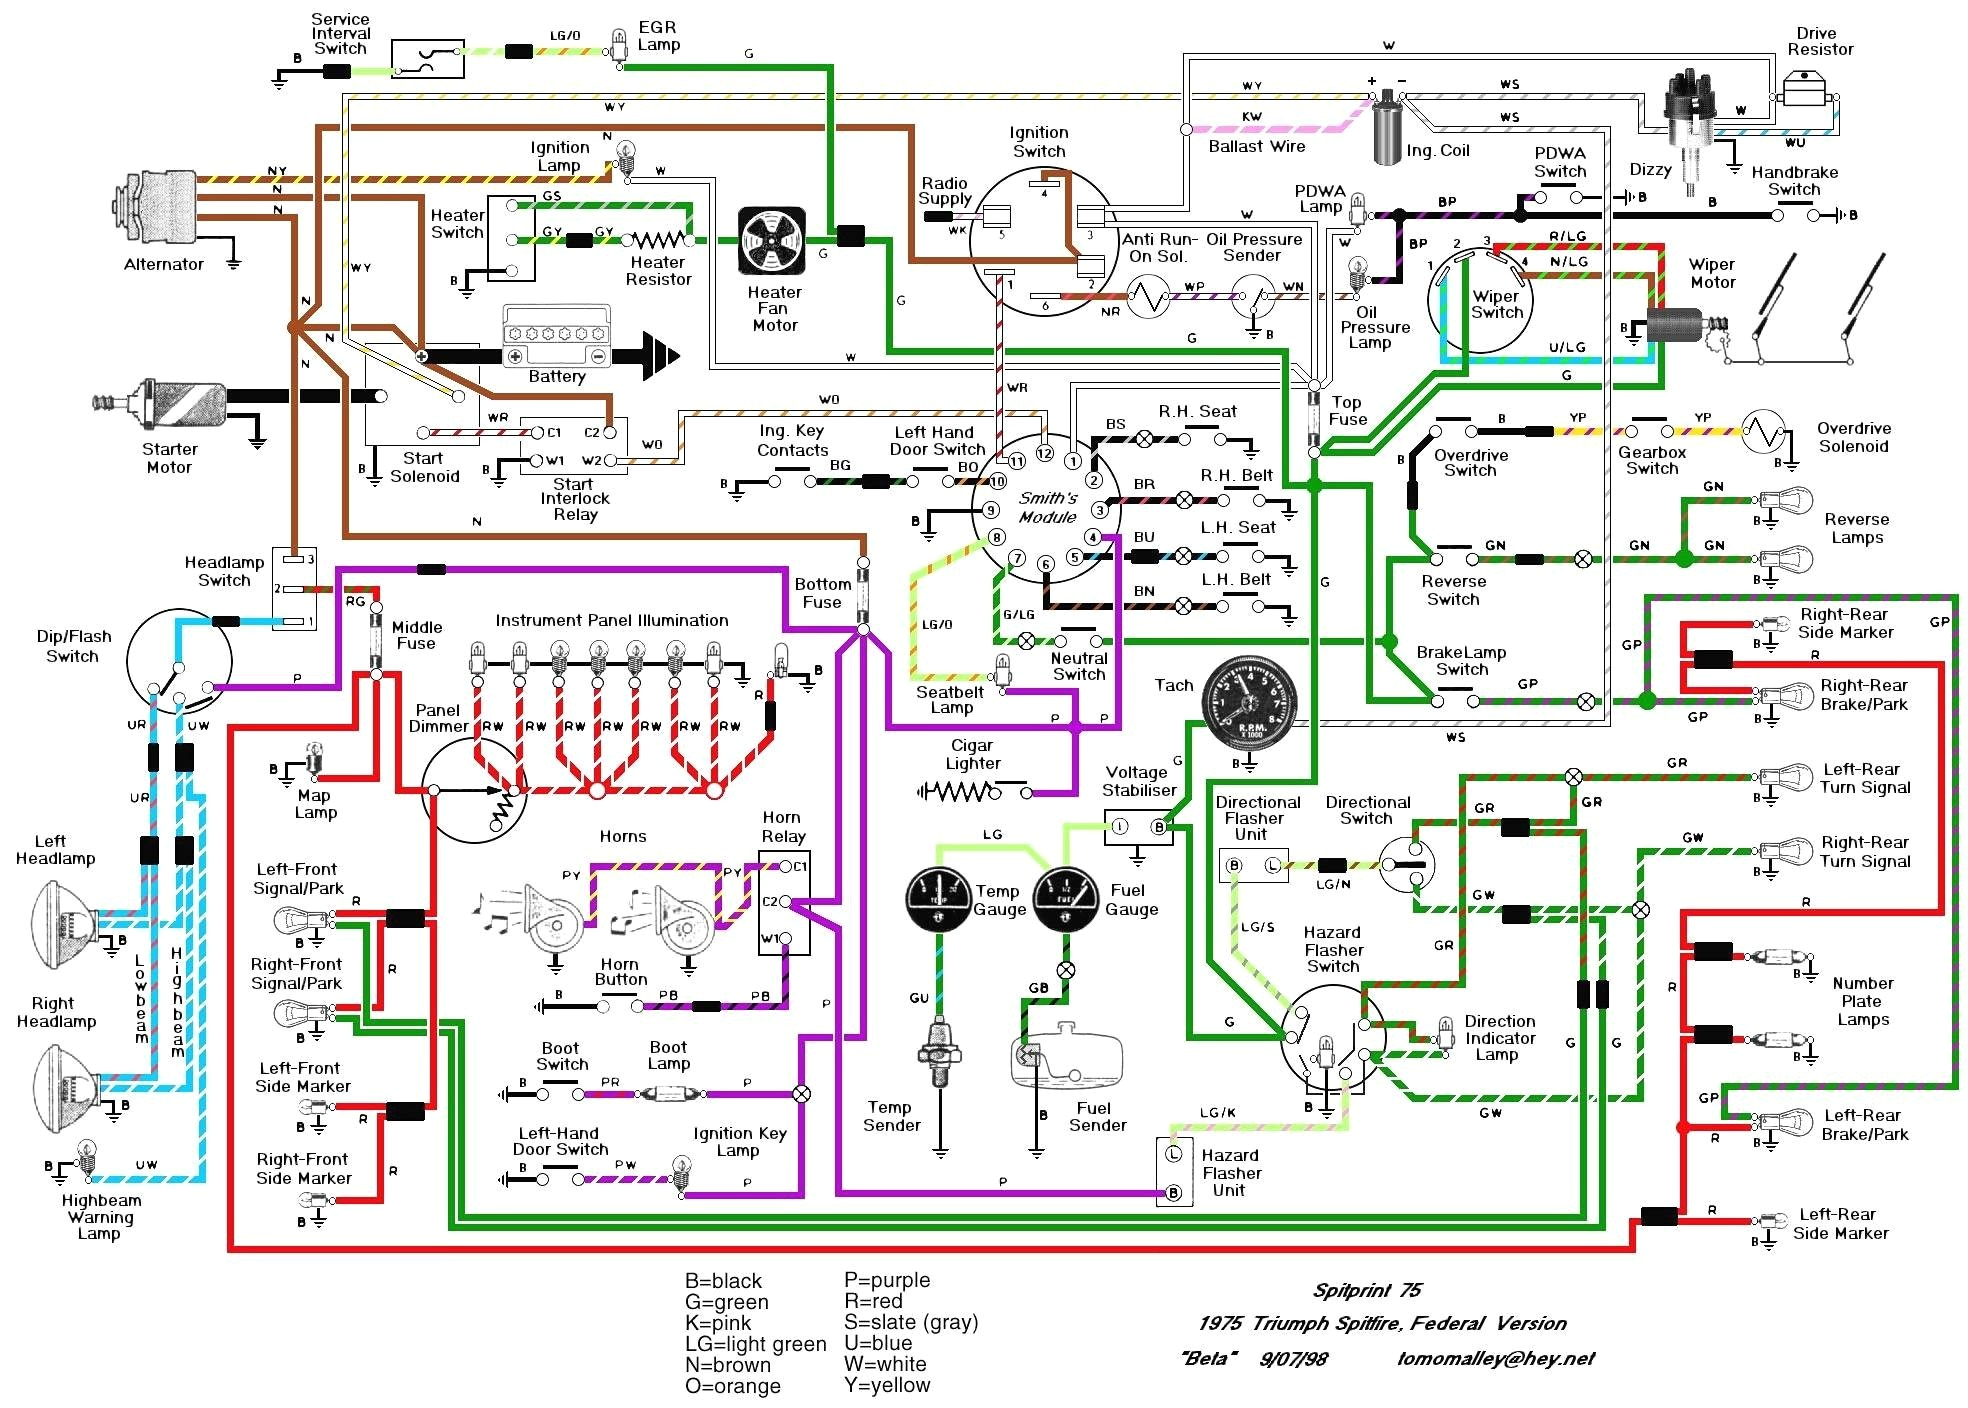 Ez Wiring 20 Circuit Harness Diagram Ez Wiring 21 Circuit Diagram 55 Chevy Wiring Diagram